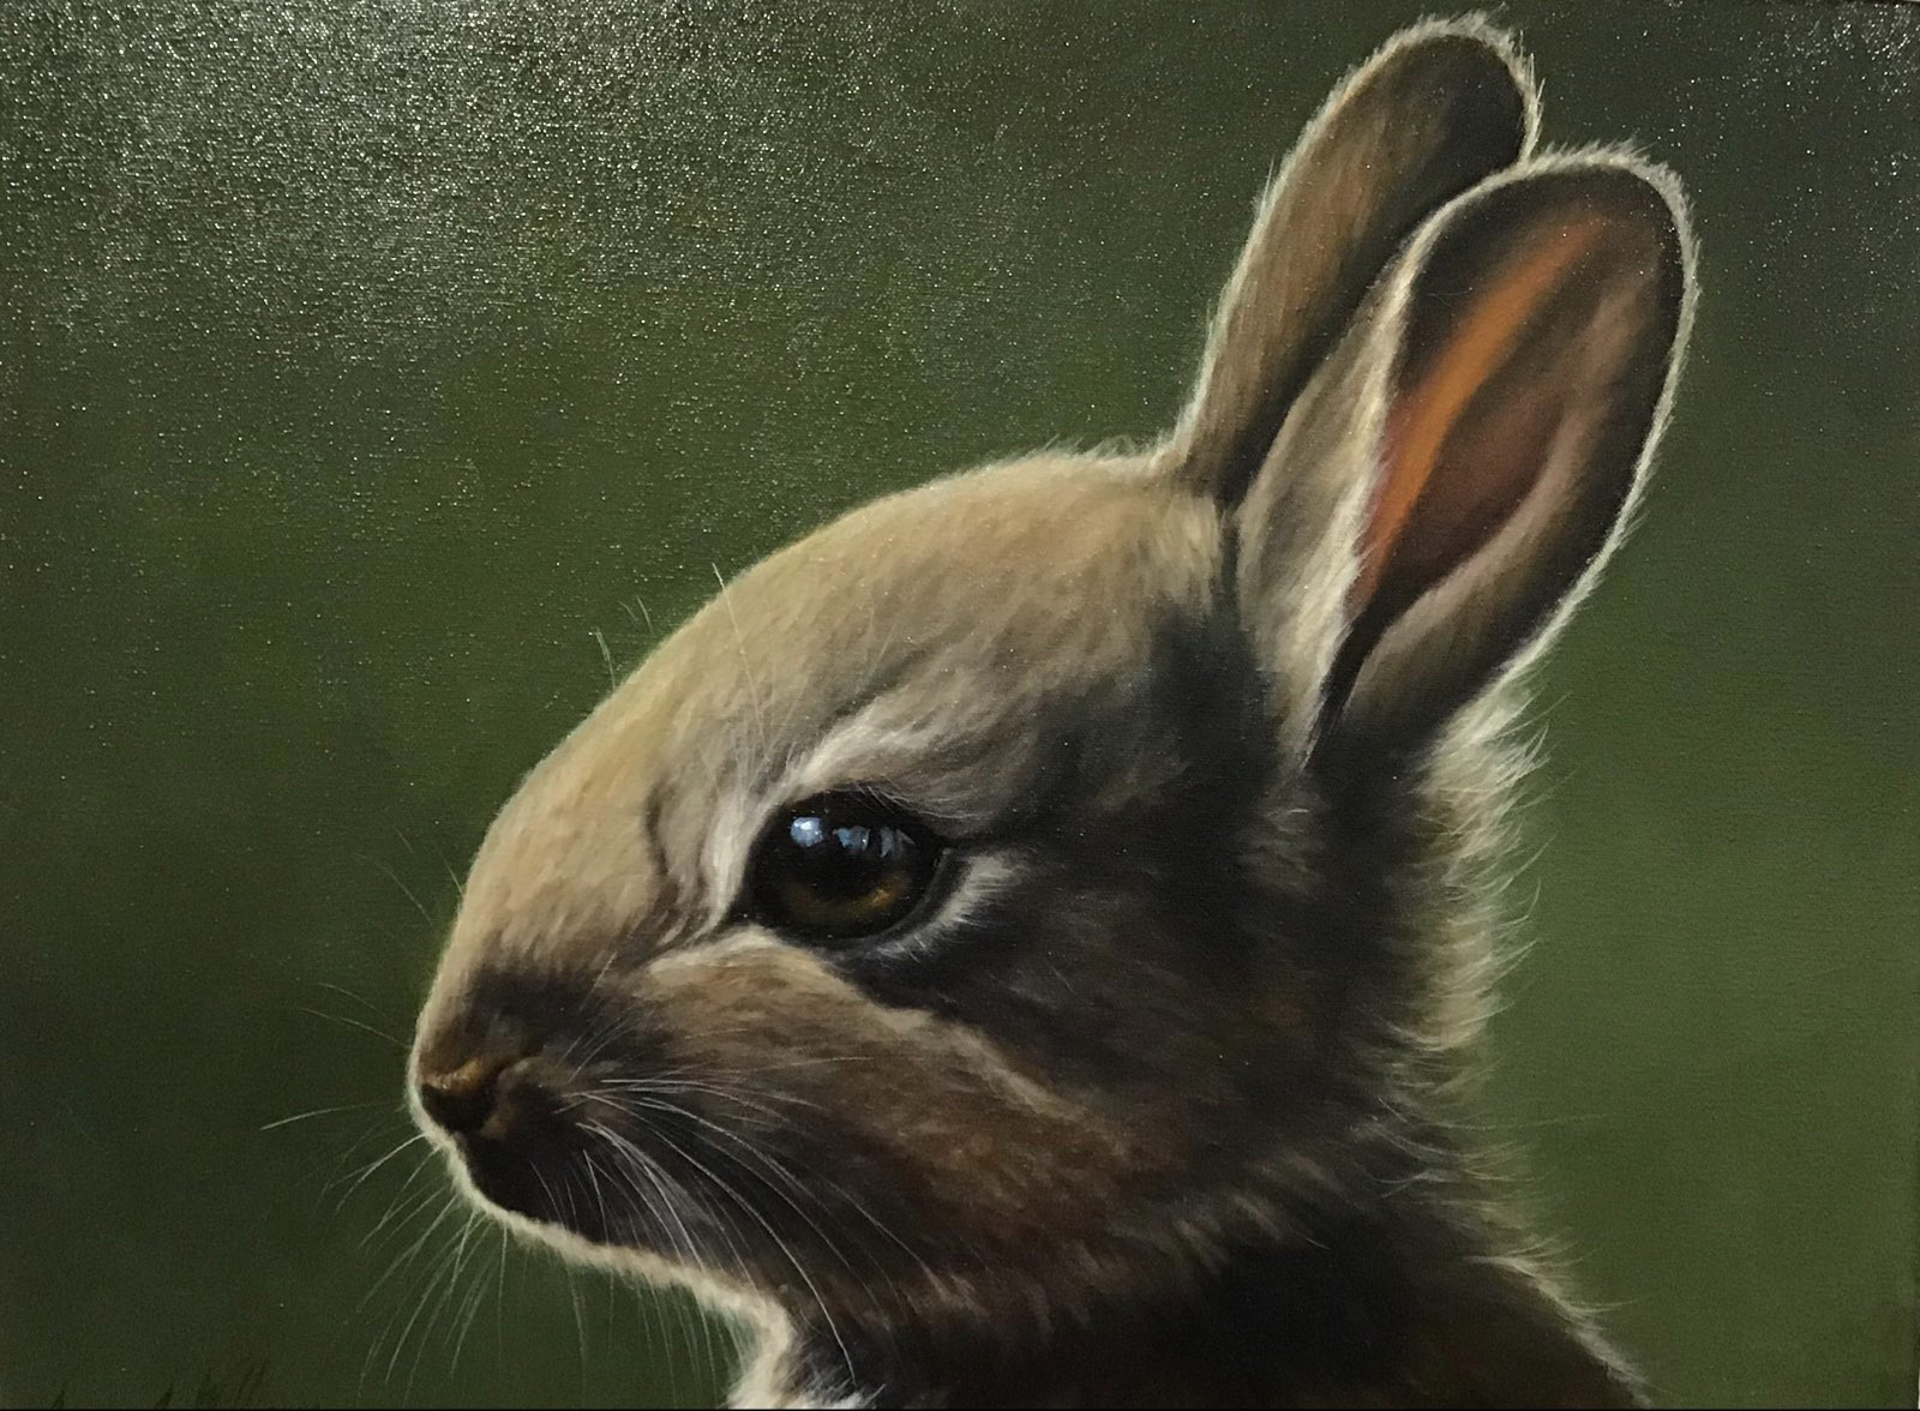 Rabbit by James J. Williams